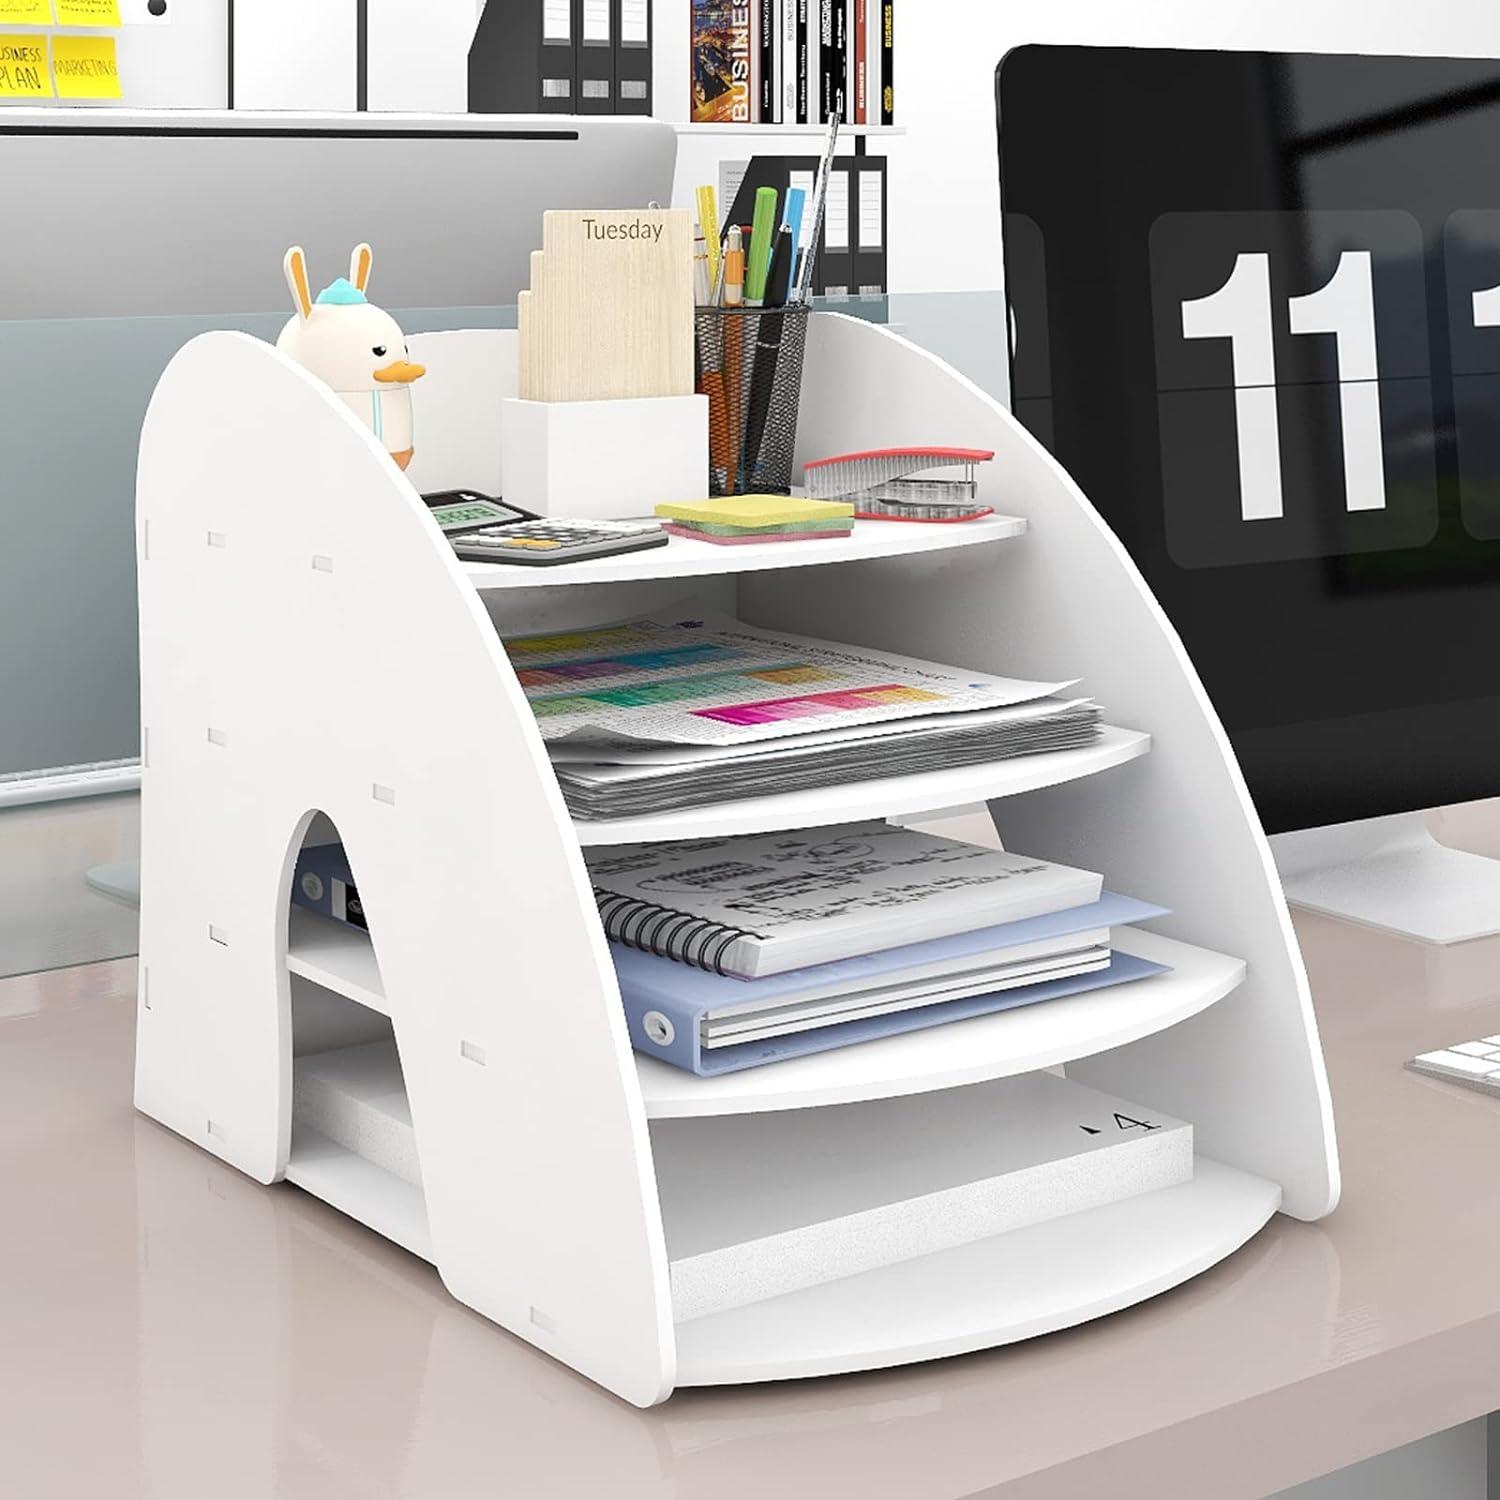 natwind 4-tier file folder paper organizer for desk desktop white office supplies desk organizer mail letter 